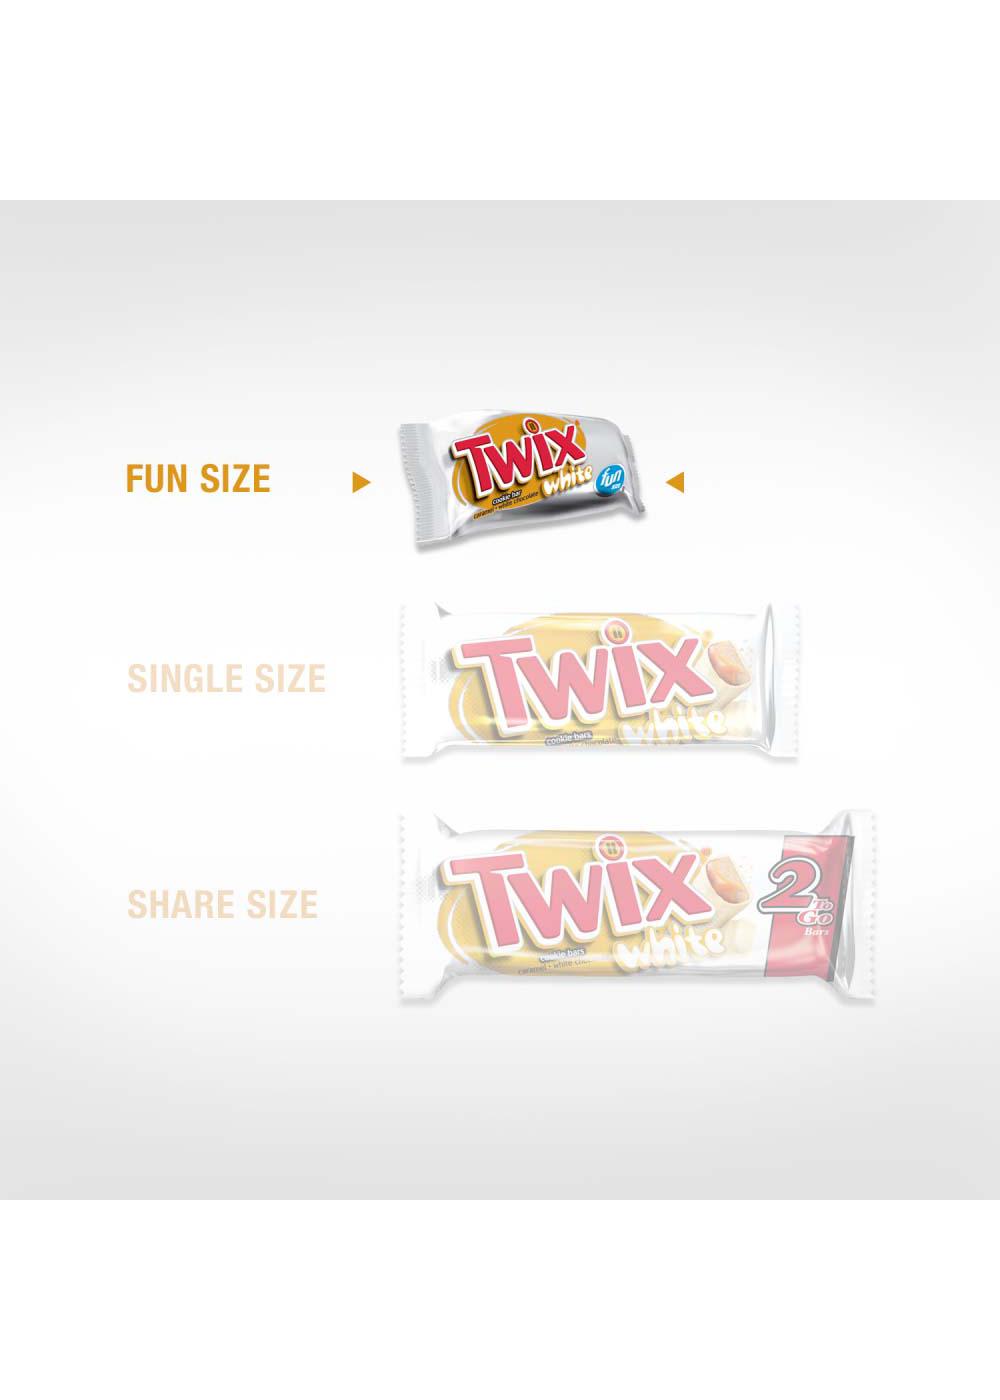 Twix Caramel White Chocolate Fun Size Cookie Bar Candy Bag; image 7 of 7